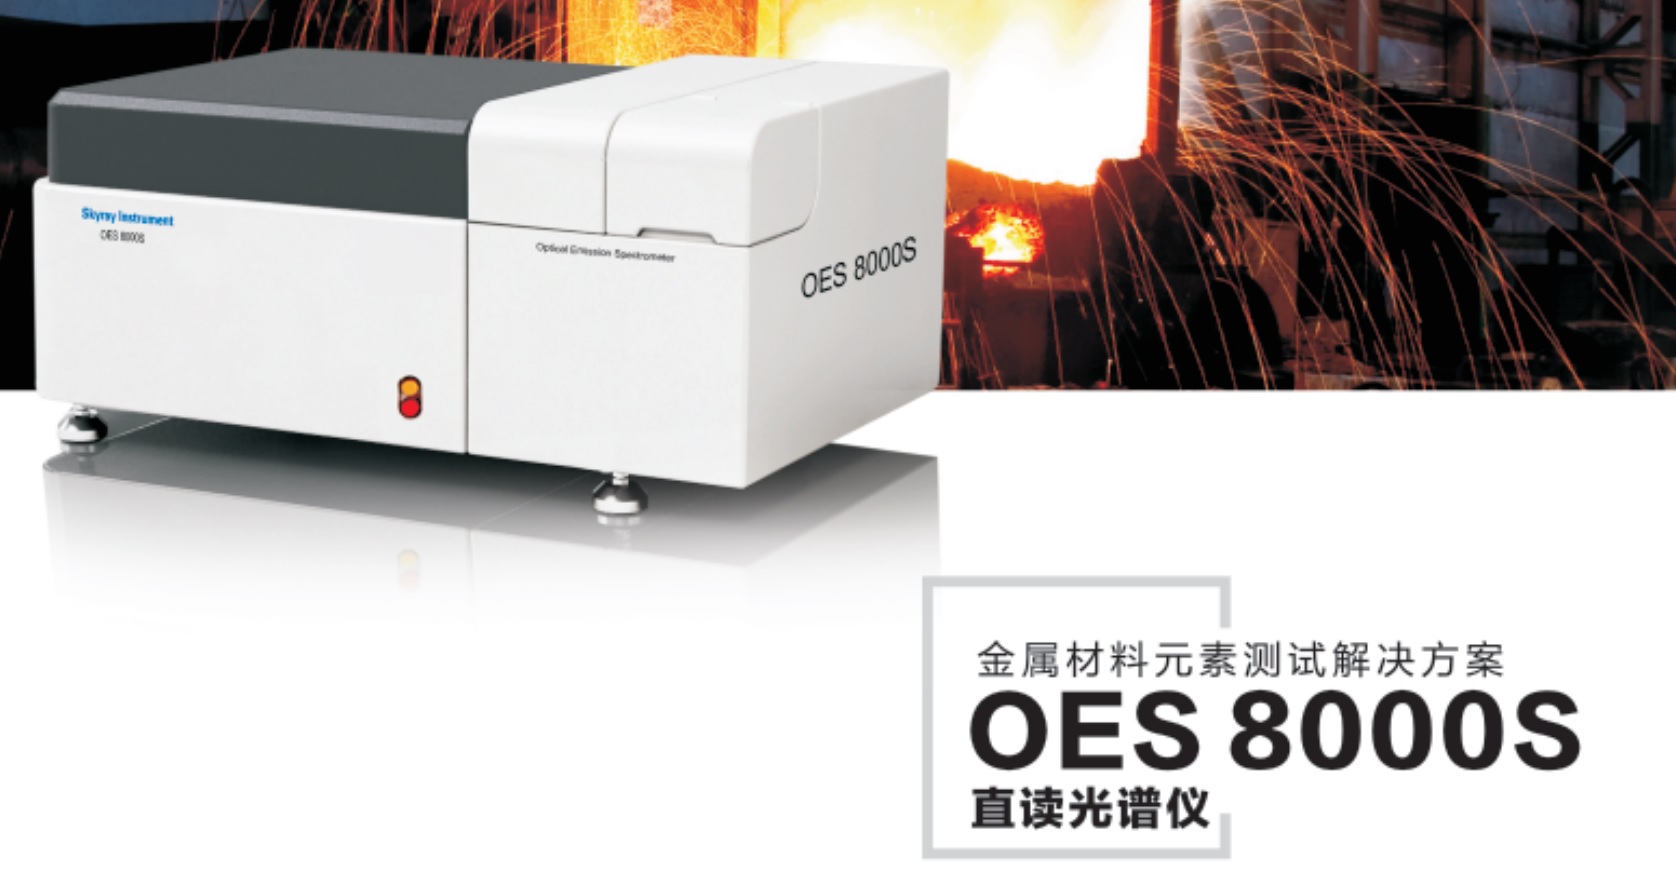 OES8000S-Jiangsu Skyray Instrument Co., Ltd.